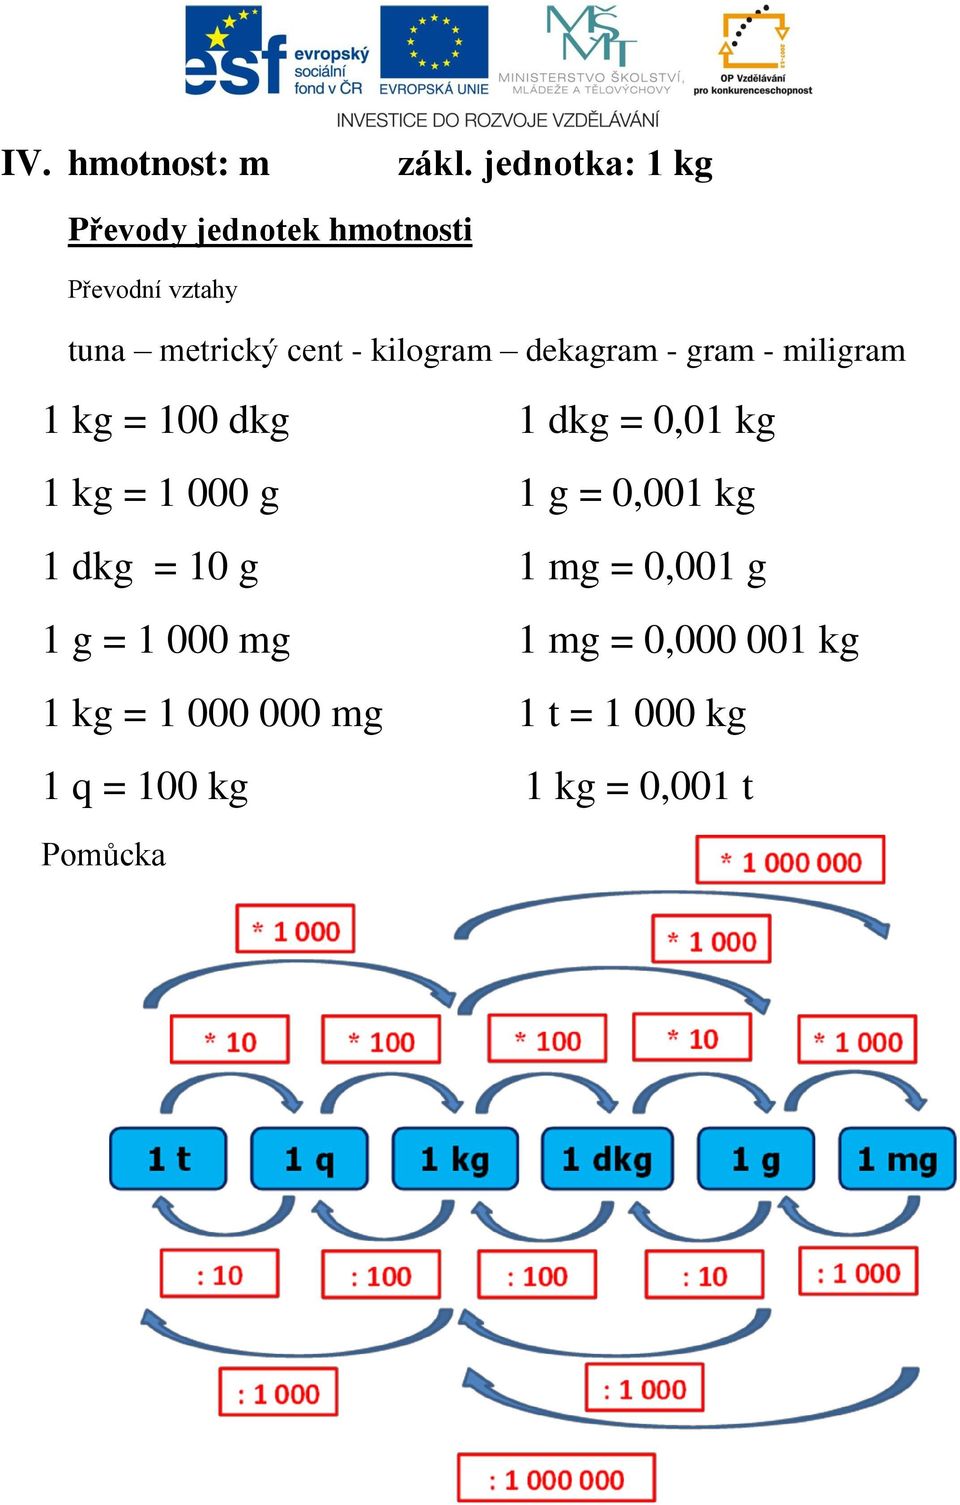 kilogram dekagram - gram - miligram 1 kg = 100 dkg 1 dkg = 0,01 kg 1 kg = 1 000 g